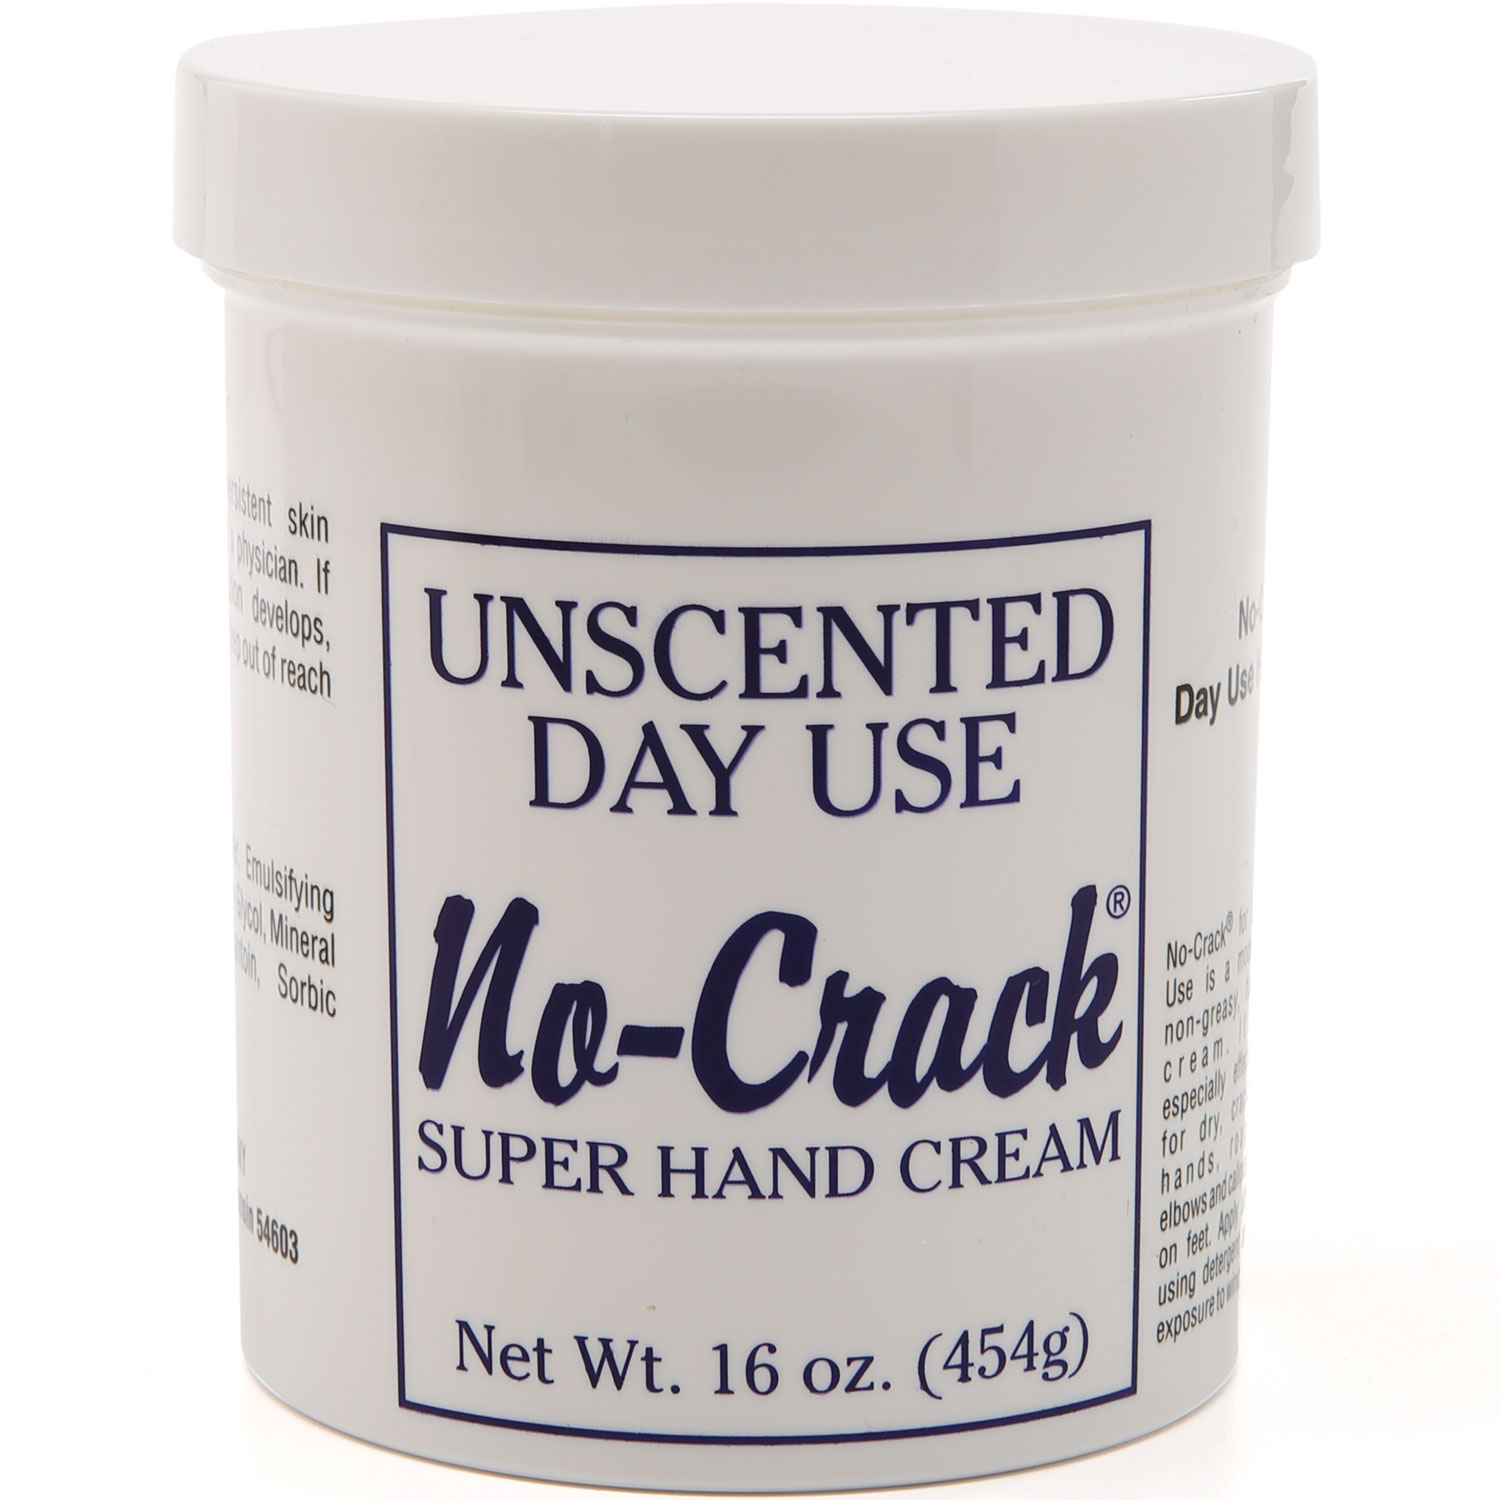 No-Crack -oz. Super Hand Cream